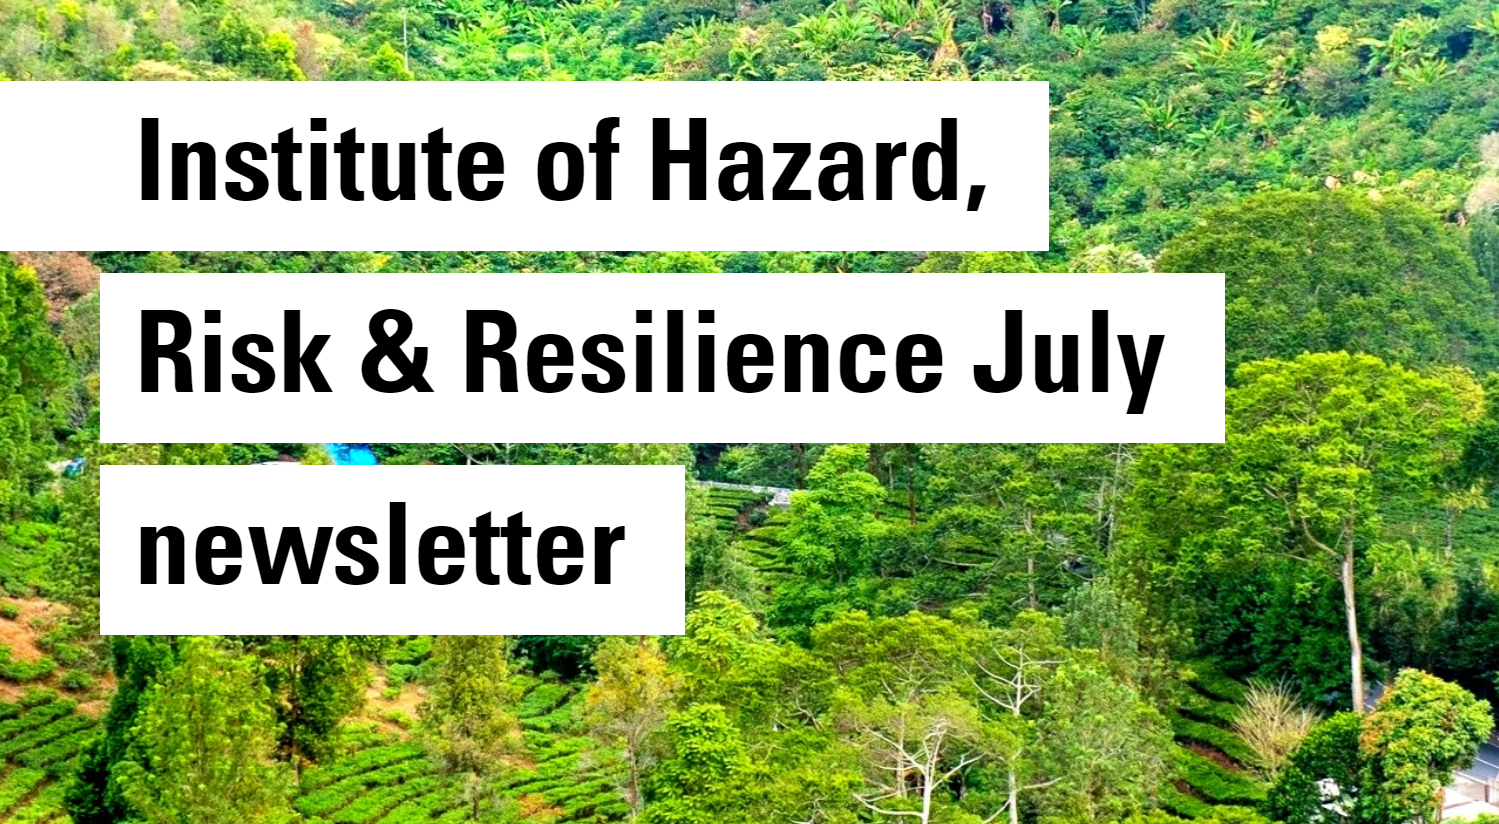 Institute of Hazard, Risk & Resilience July newsletter